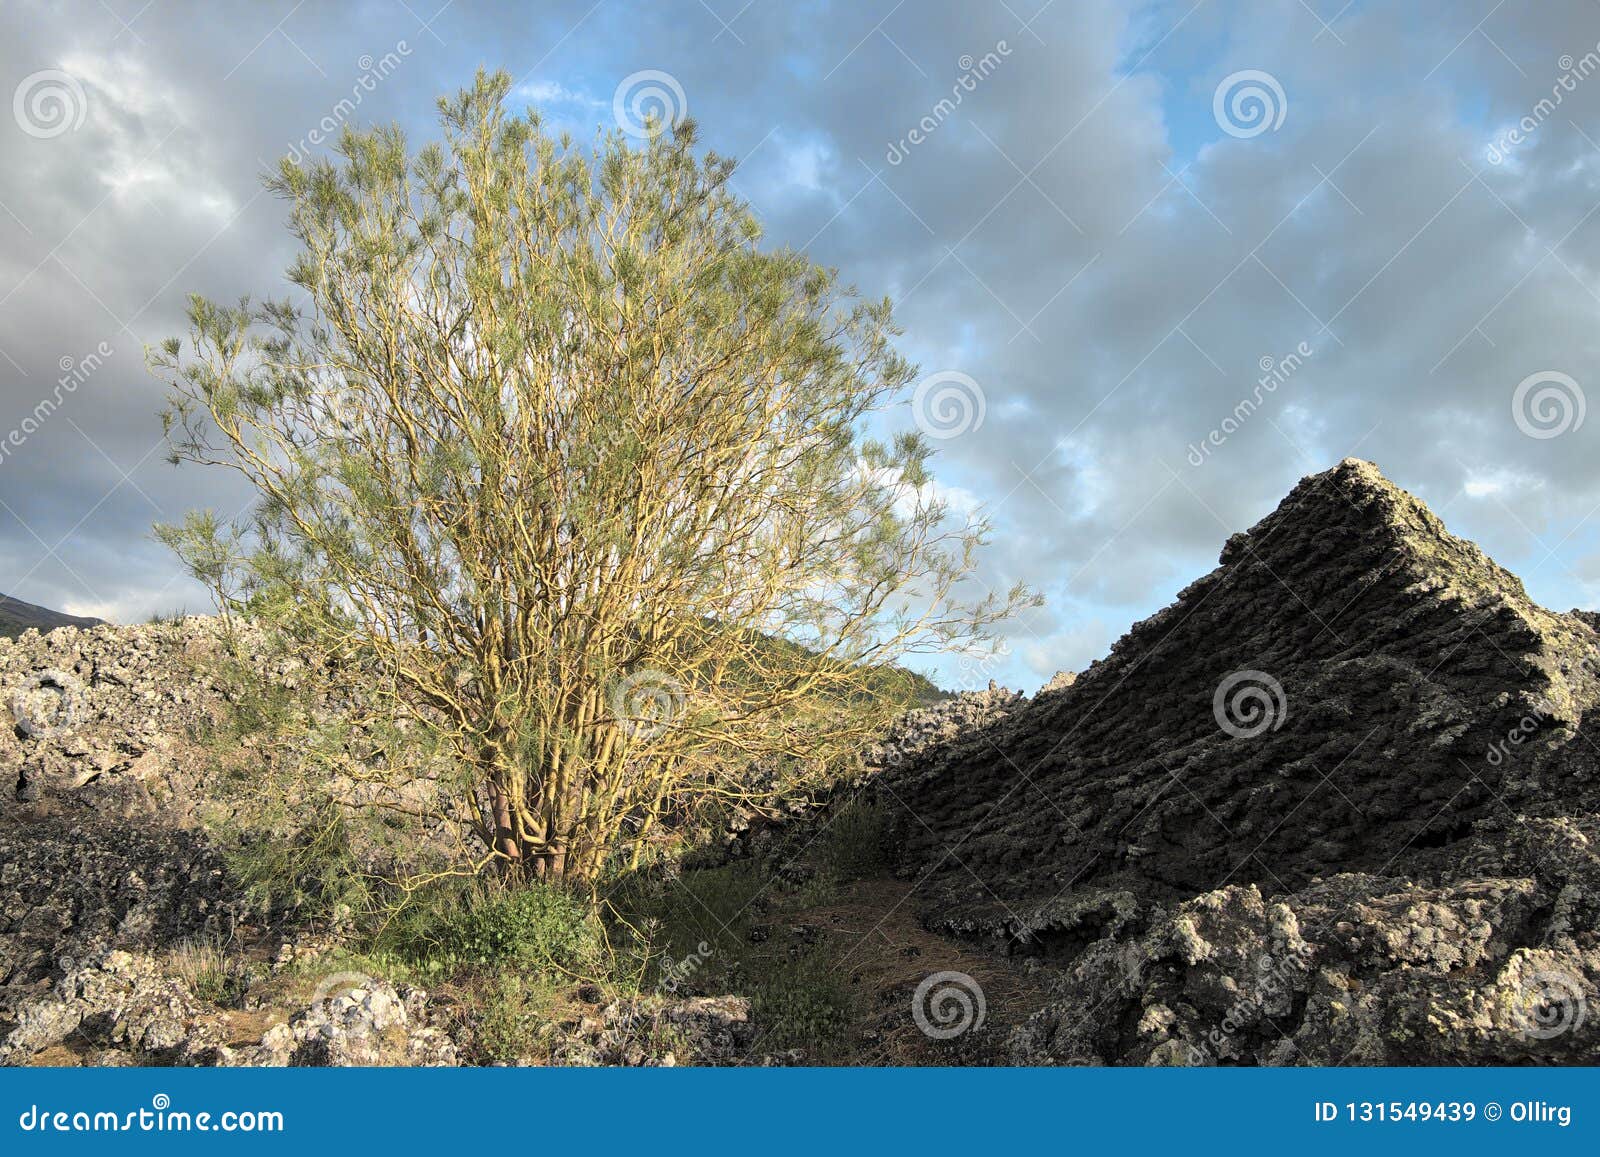 shrub of etna broom on ancient lava cooled in etna national park